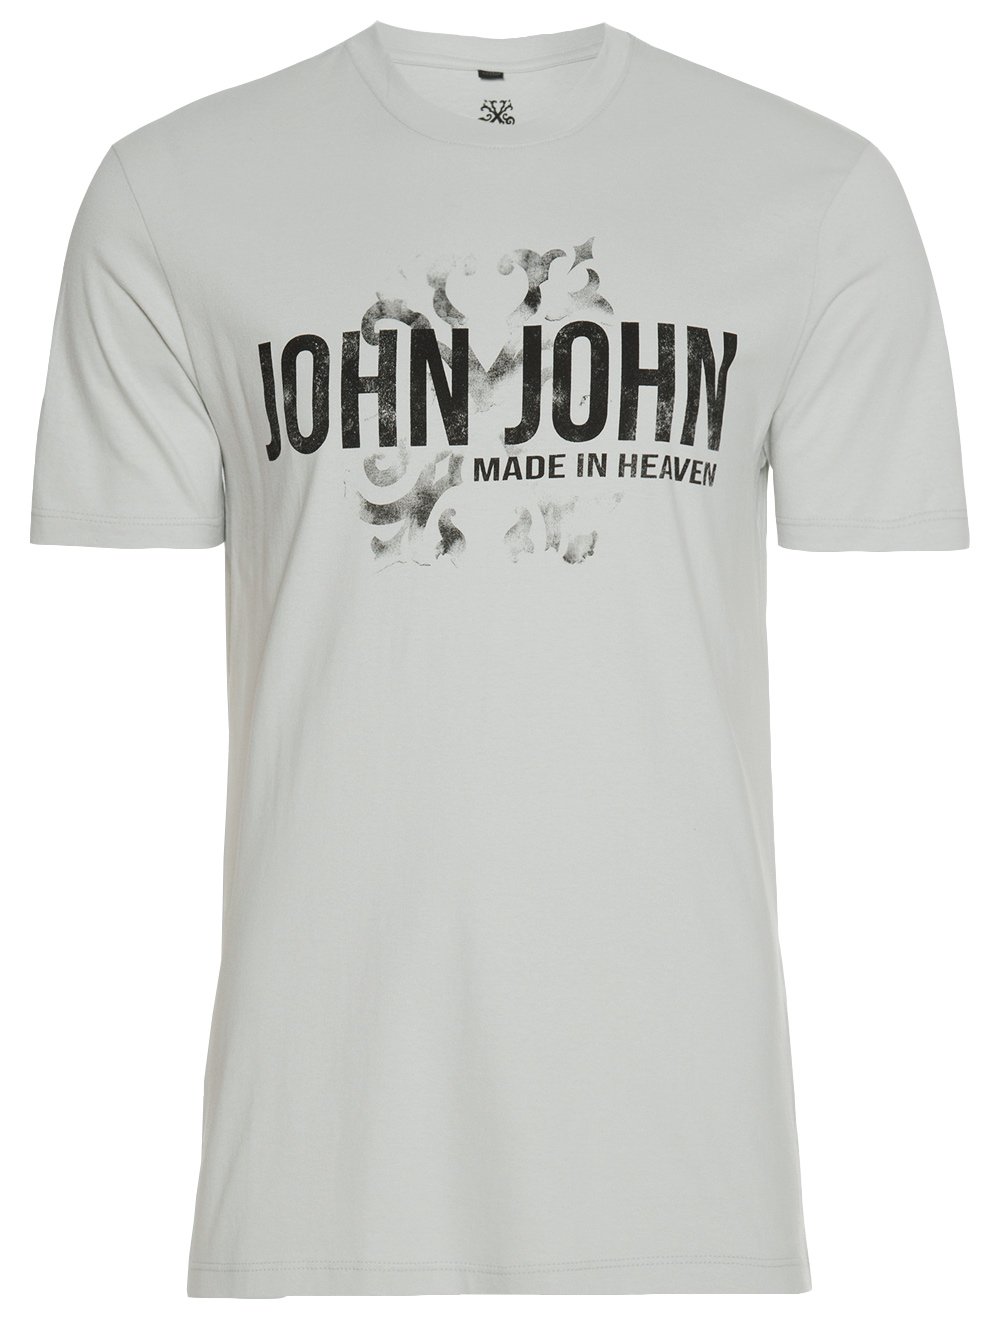 Camiseta John John Masculina Regular Block Old Preta